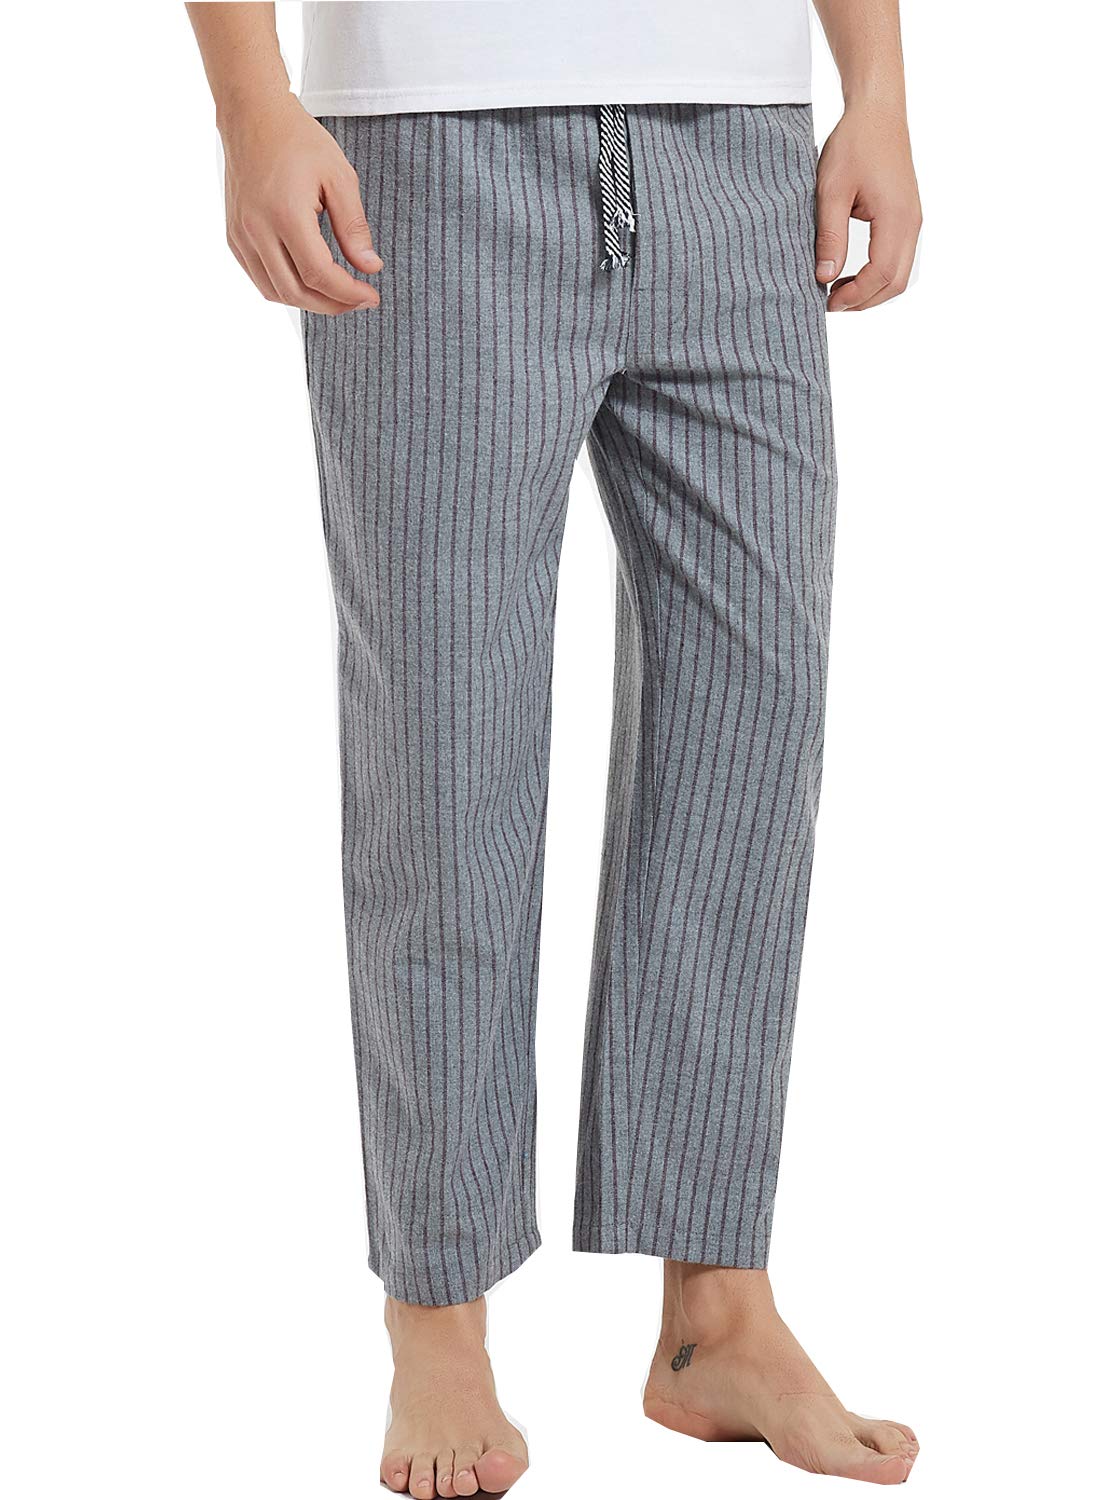 Big Boy's Cotton Plaid Pajama Pants Lounge Long Pants Loose Size 10-12 Years